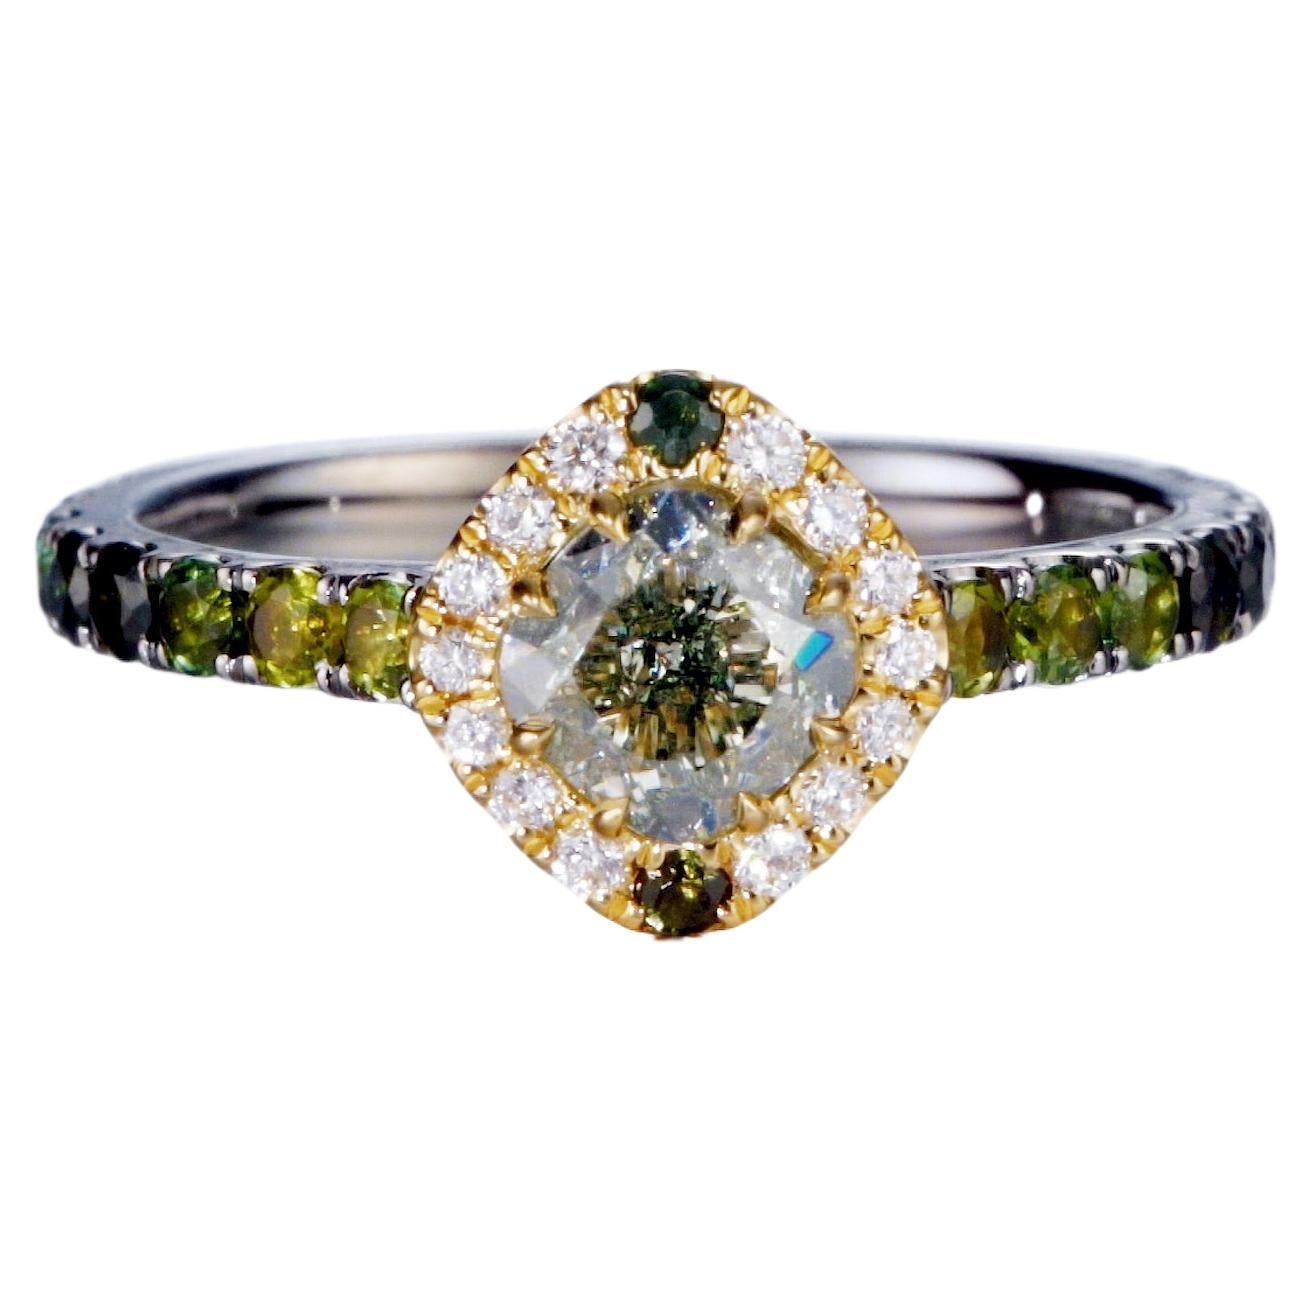 Bague 18 carats, certifiée GIA, 1,01 carat, diamant naturel de forme coussin gris-vert fantaisie